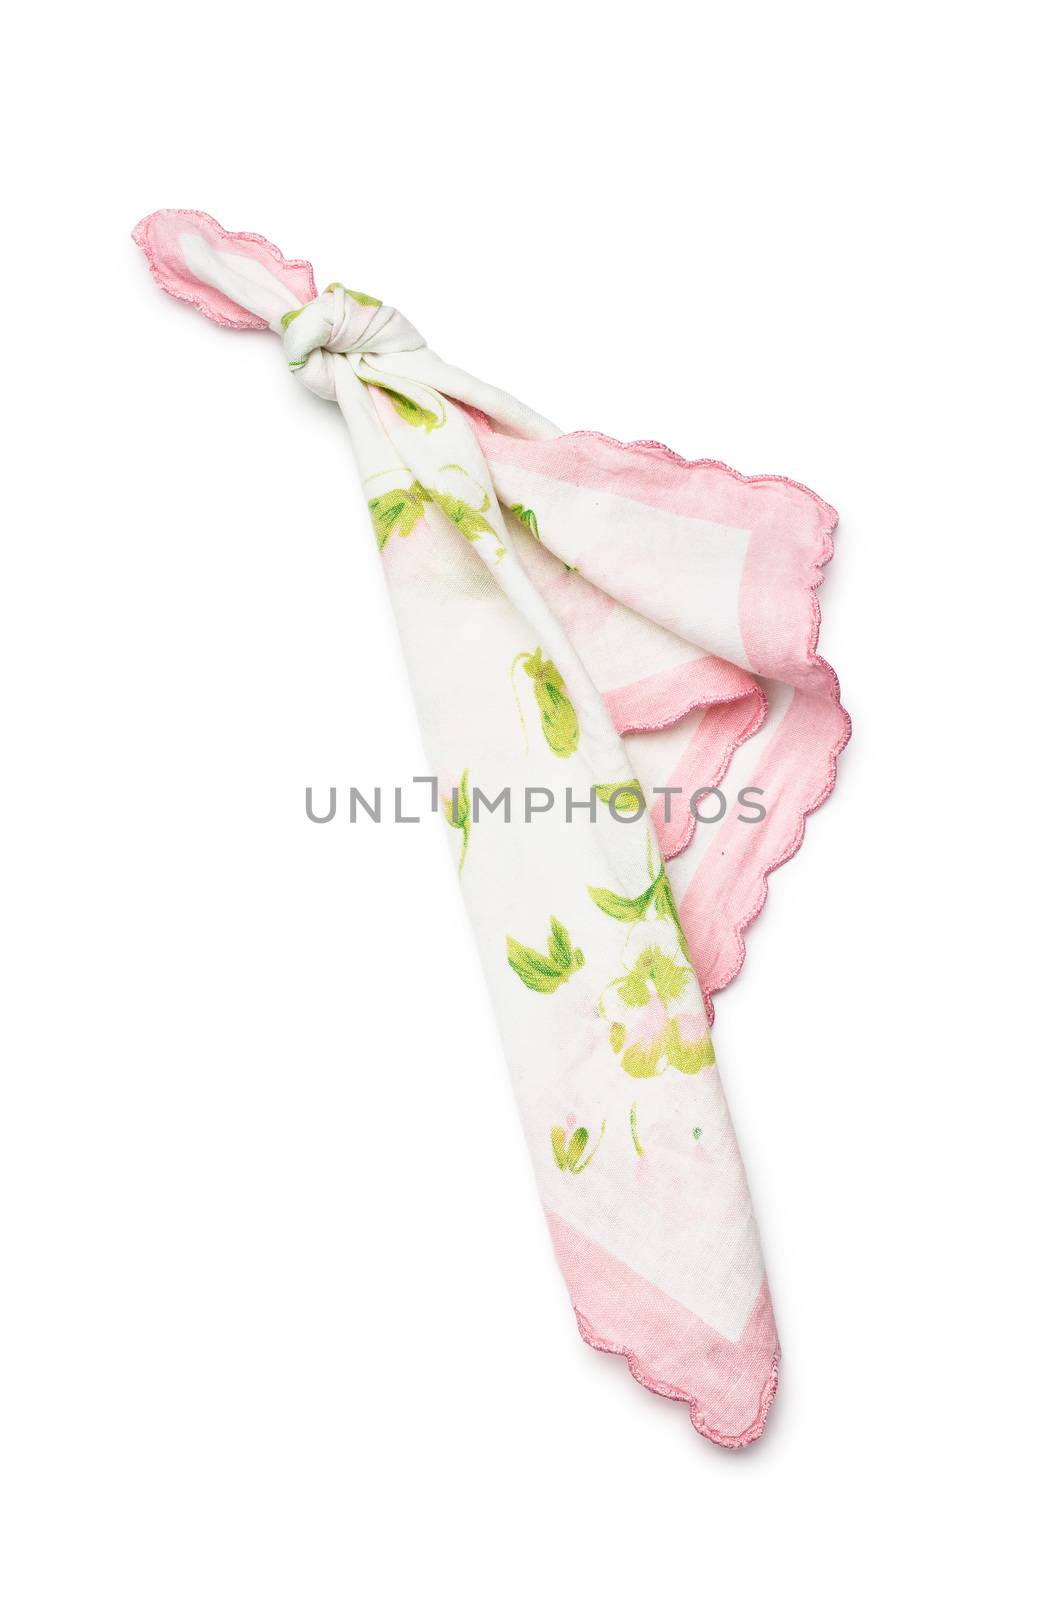 Handkerchief with a Knot by MaxalTamor